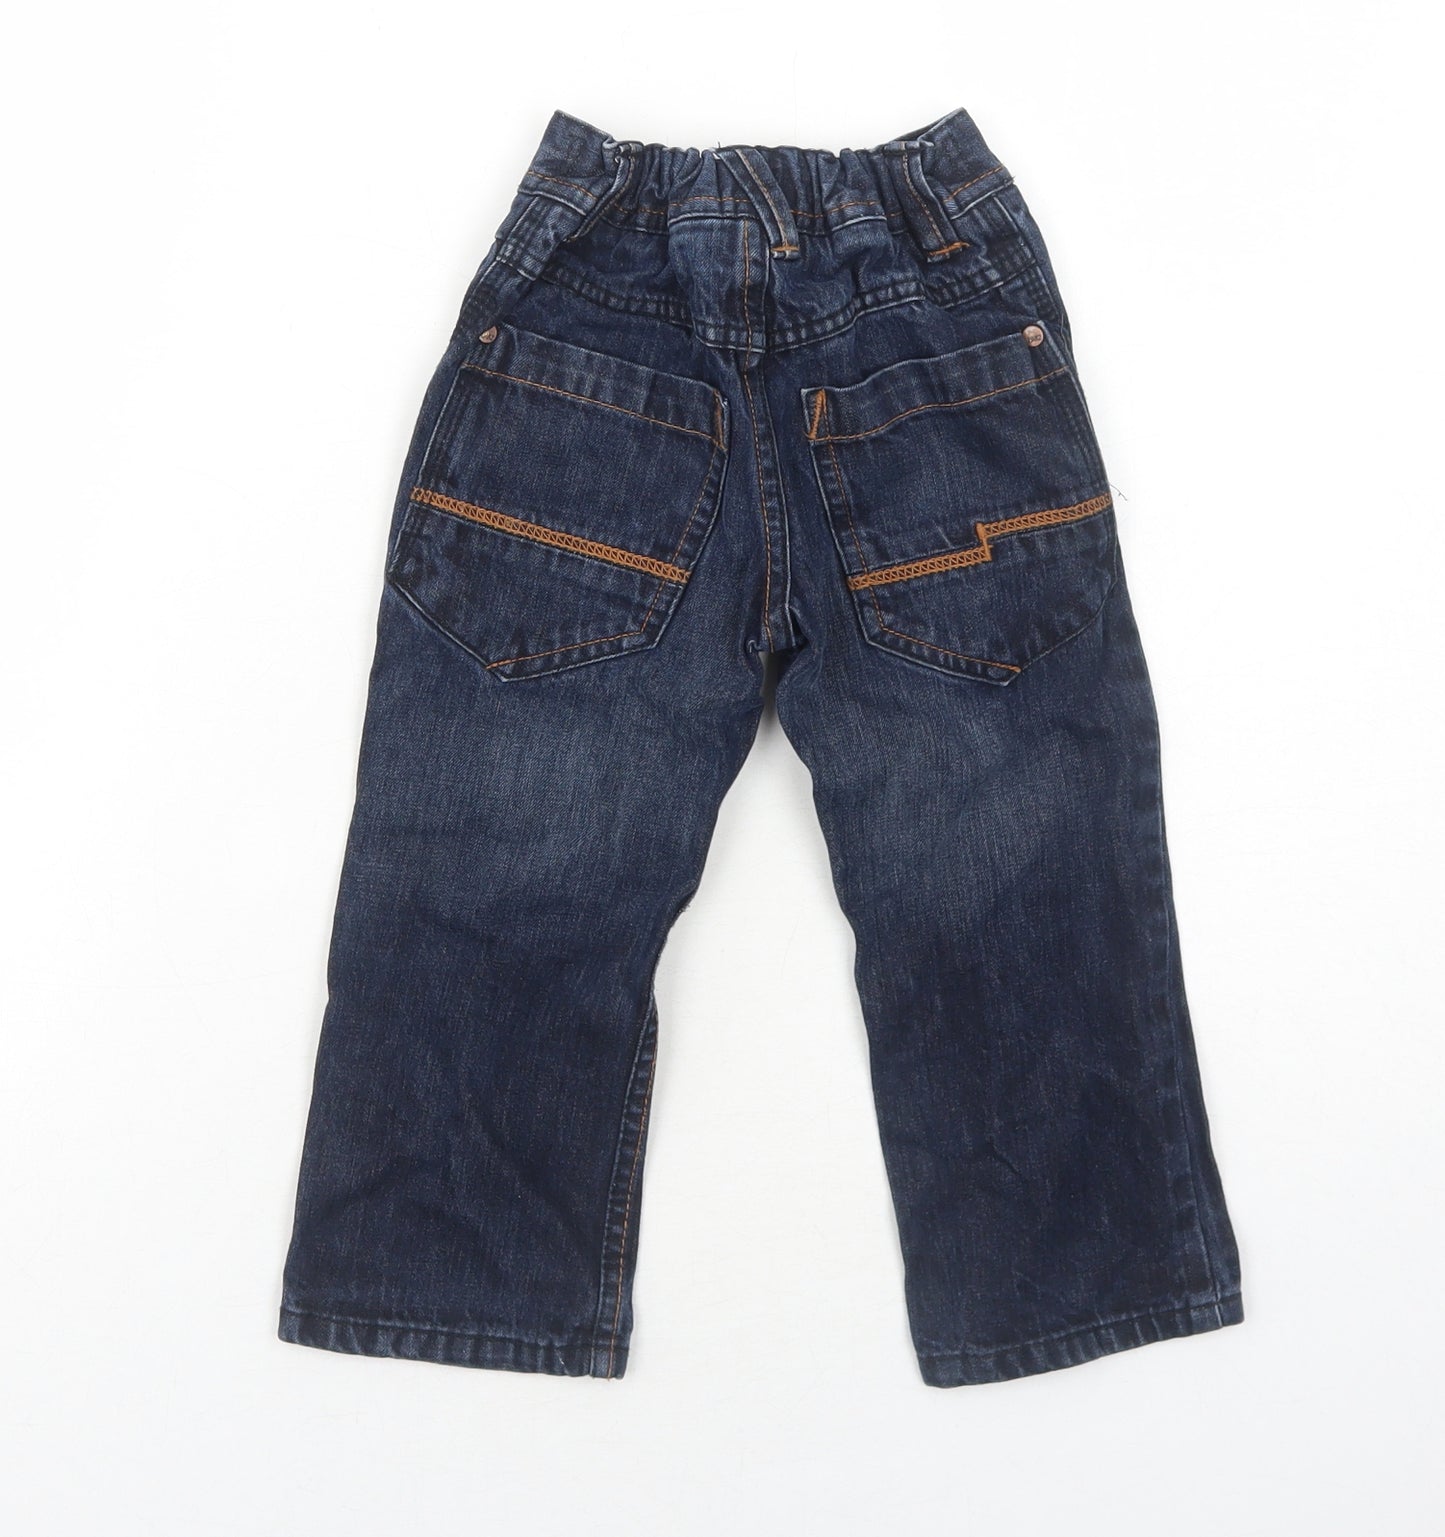 NEXT Boys Blue Cotton Straight Jeans Size 3 Years Regular Zip